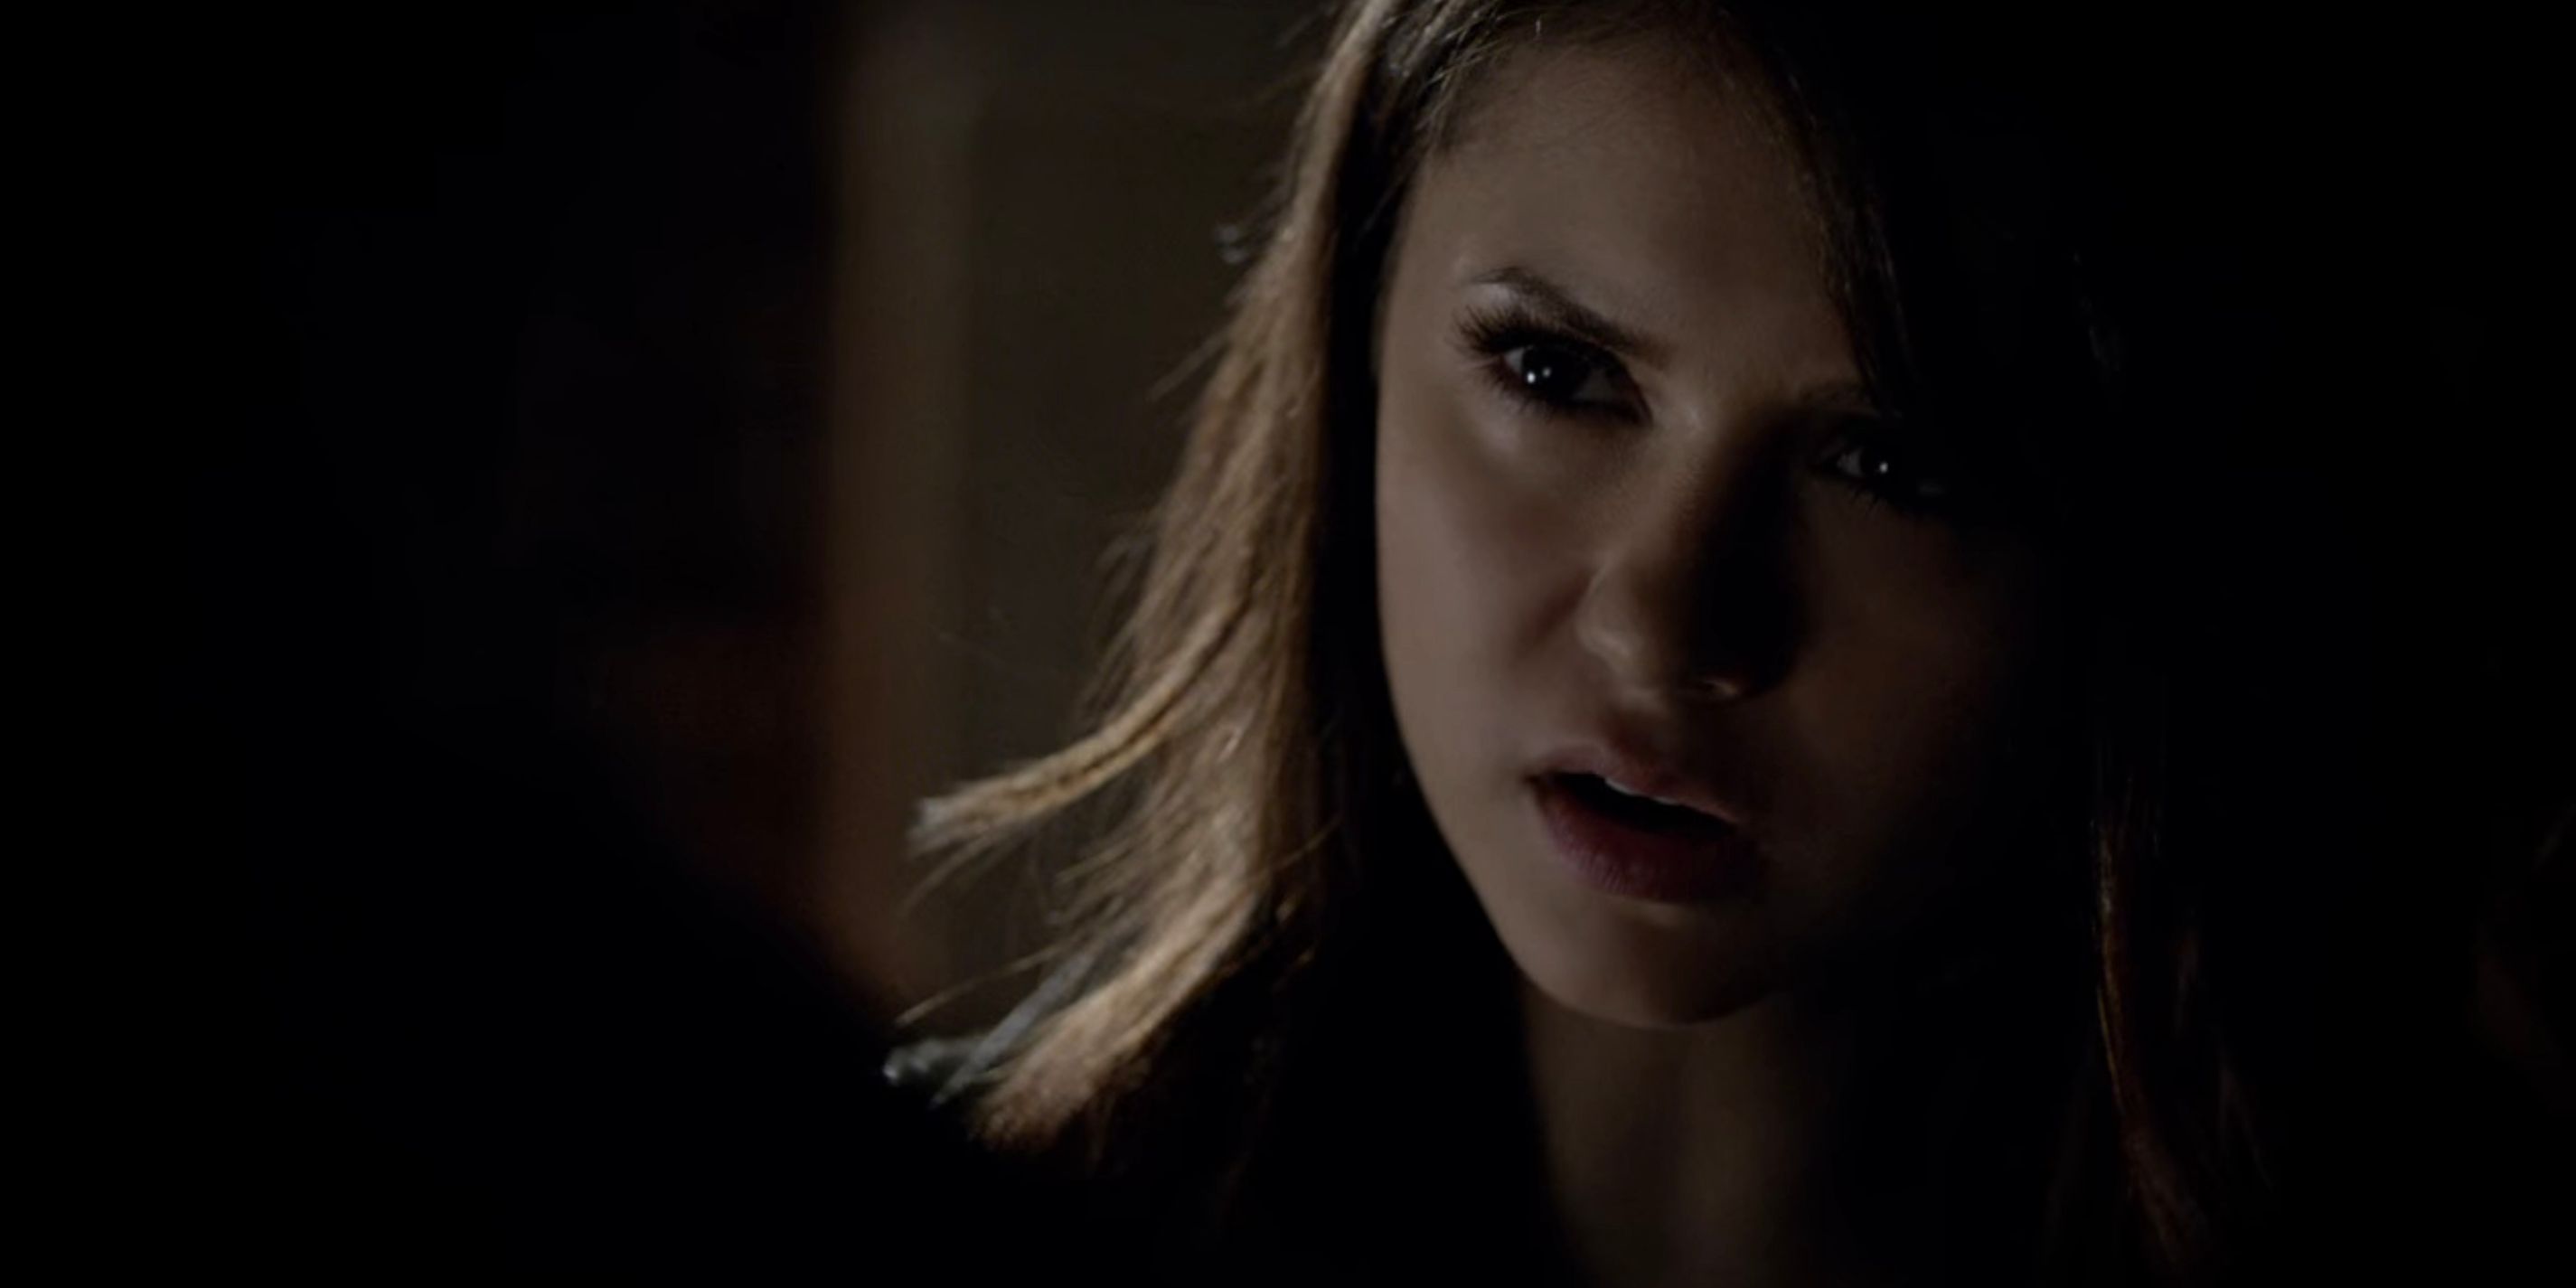 Elena suspects Stefan has feelings for Katherine in The Vampire Diaries.